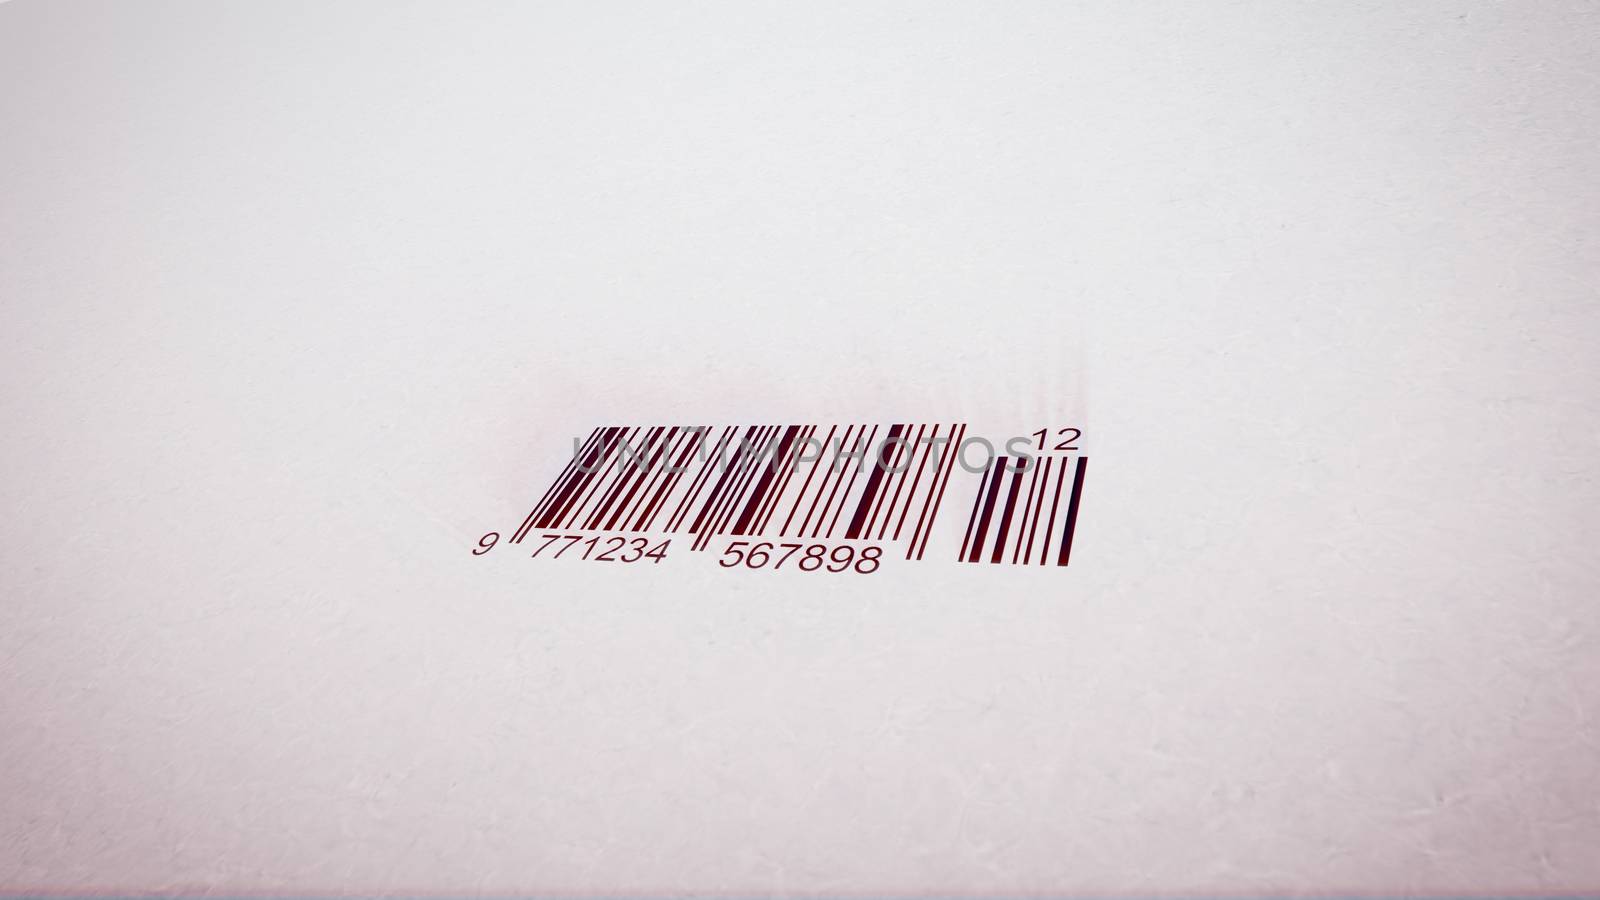 Pop art Barcode scanner illustration by klss